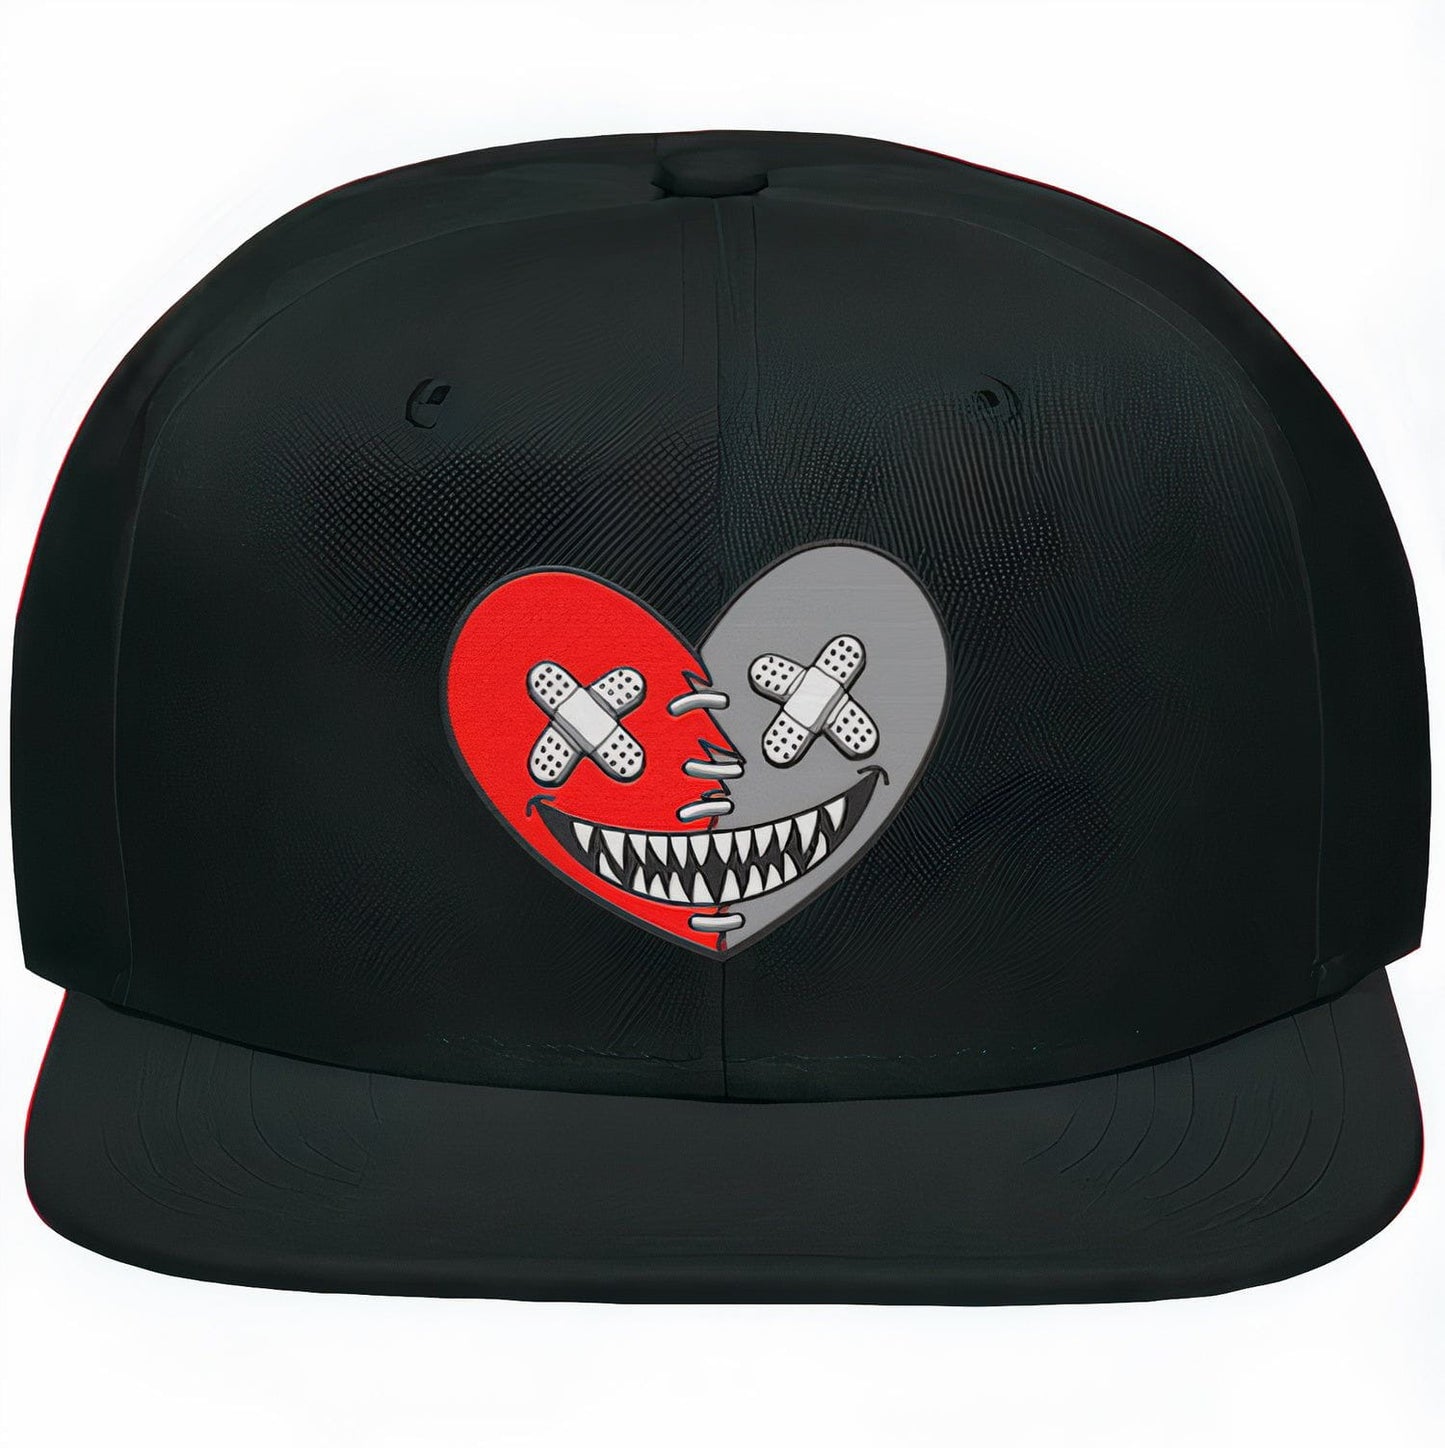 Cherry 12s Snapback Hat - Jordan 12 Cherry Hats - Heart